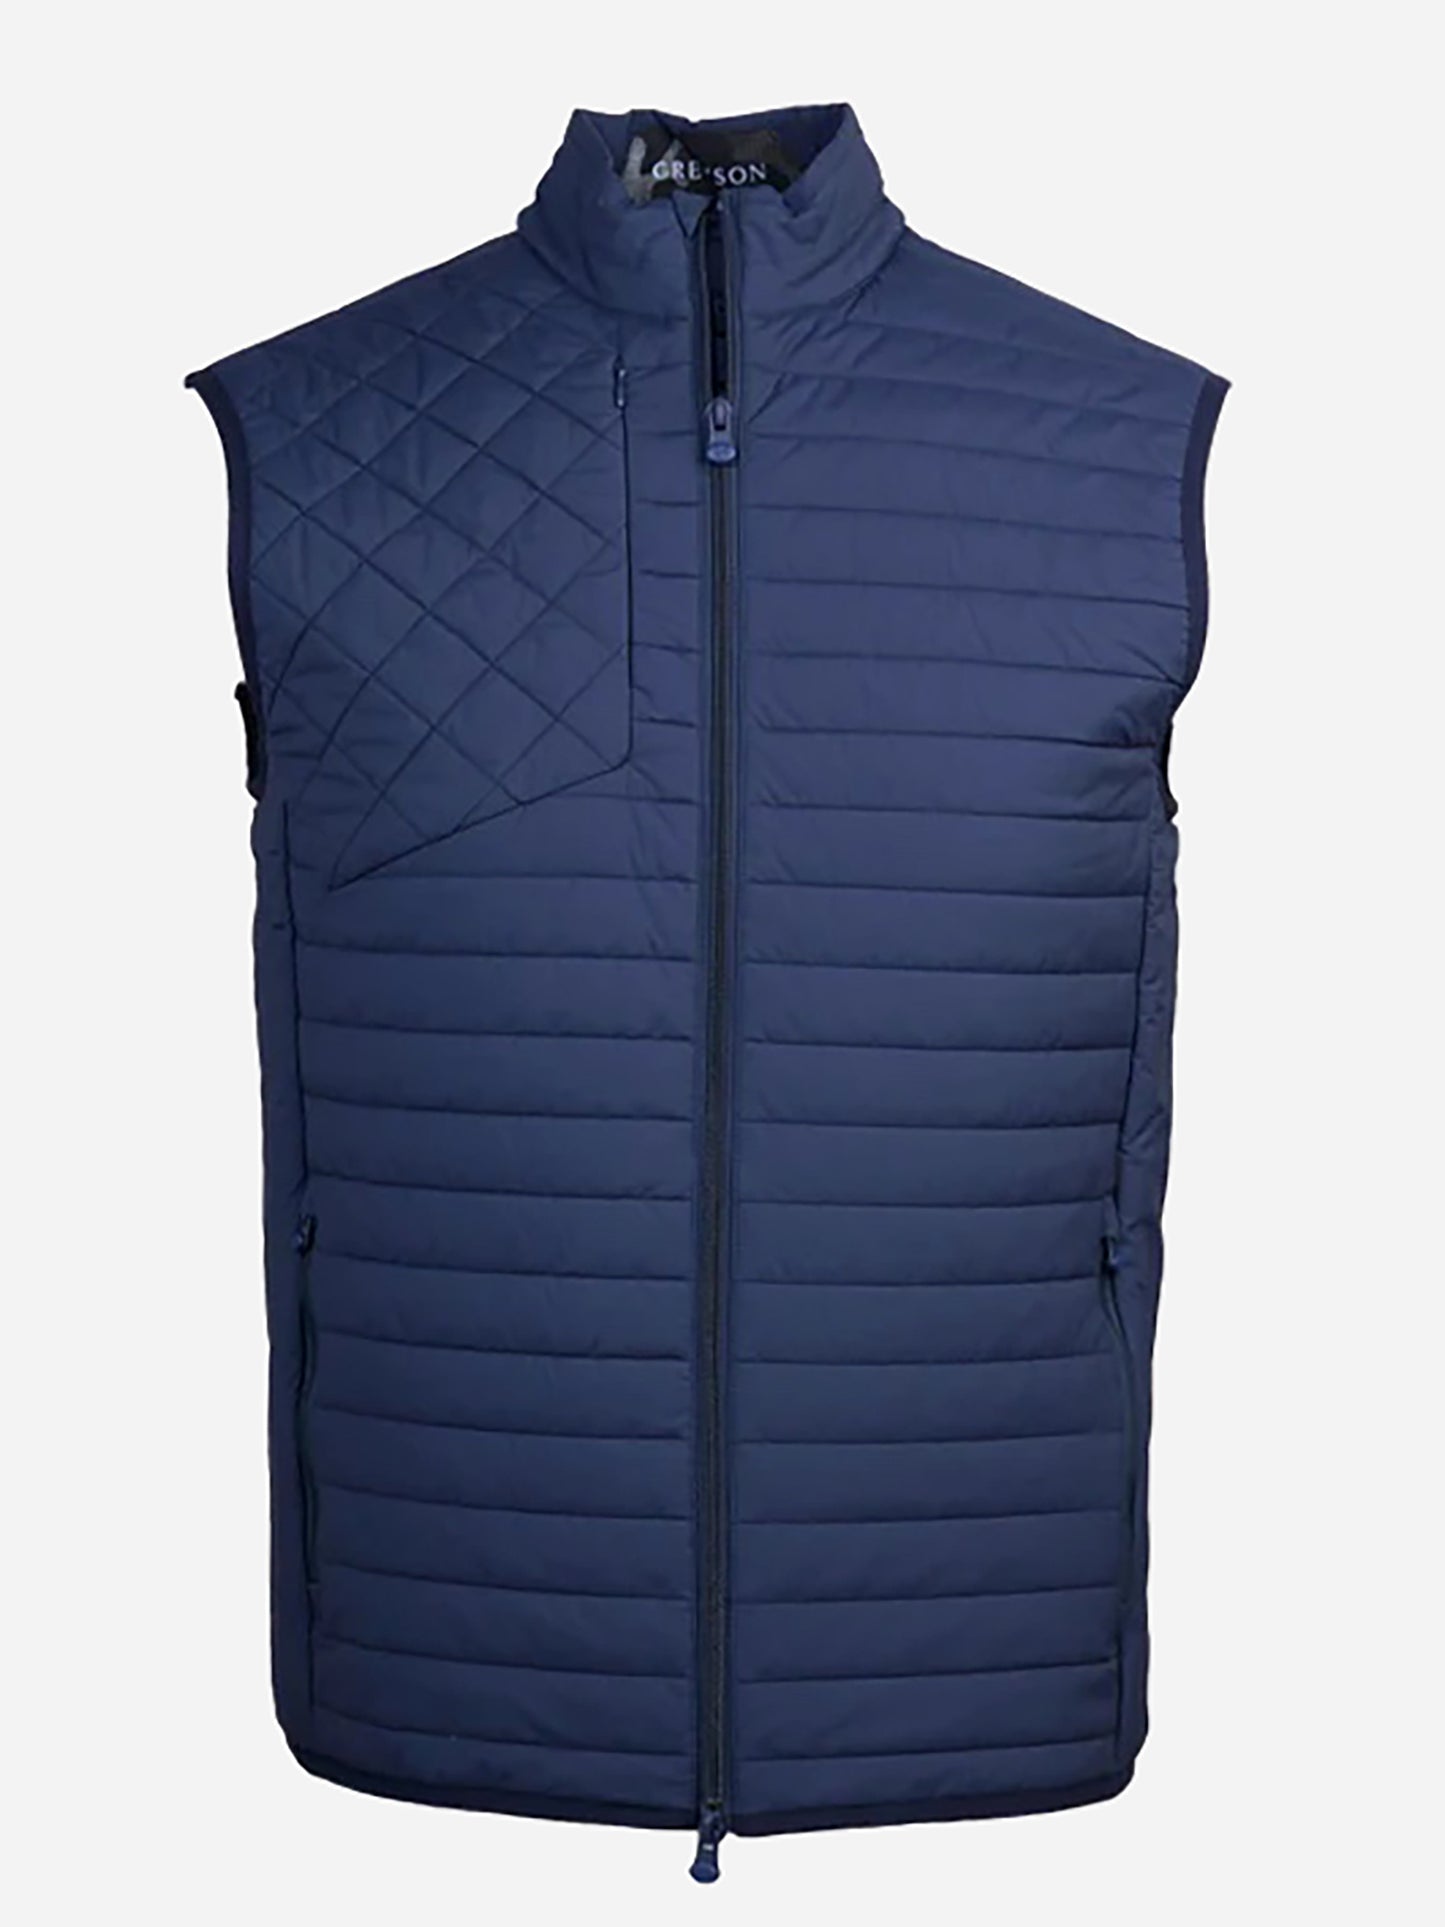 Yukon Epic Paddle Vest, Carbon / Light Blue, 2XL/3XL